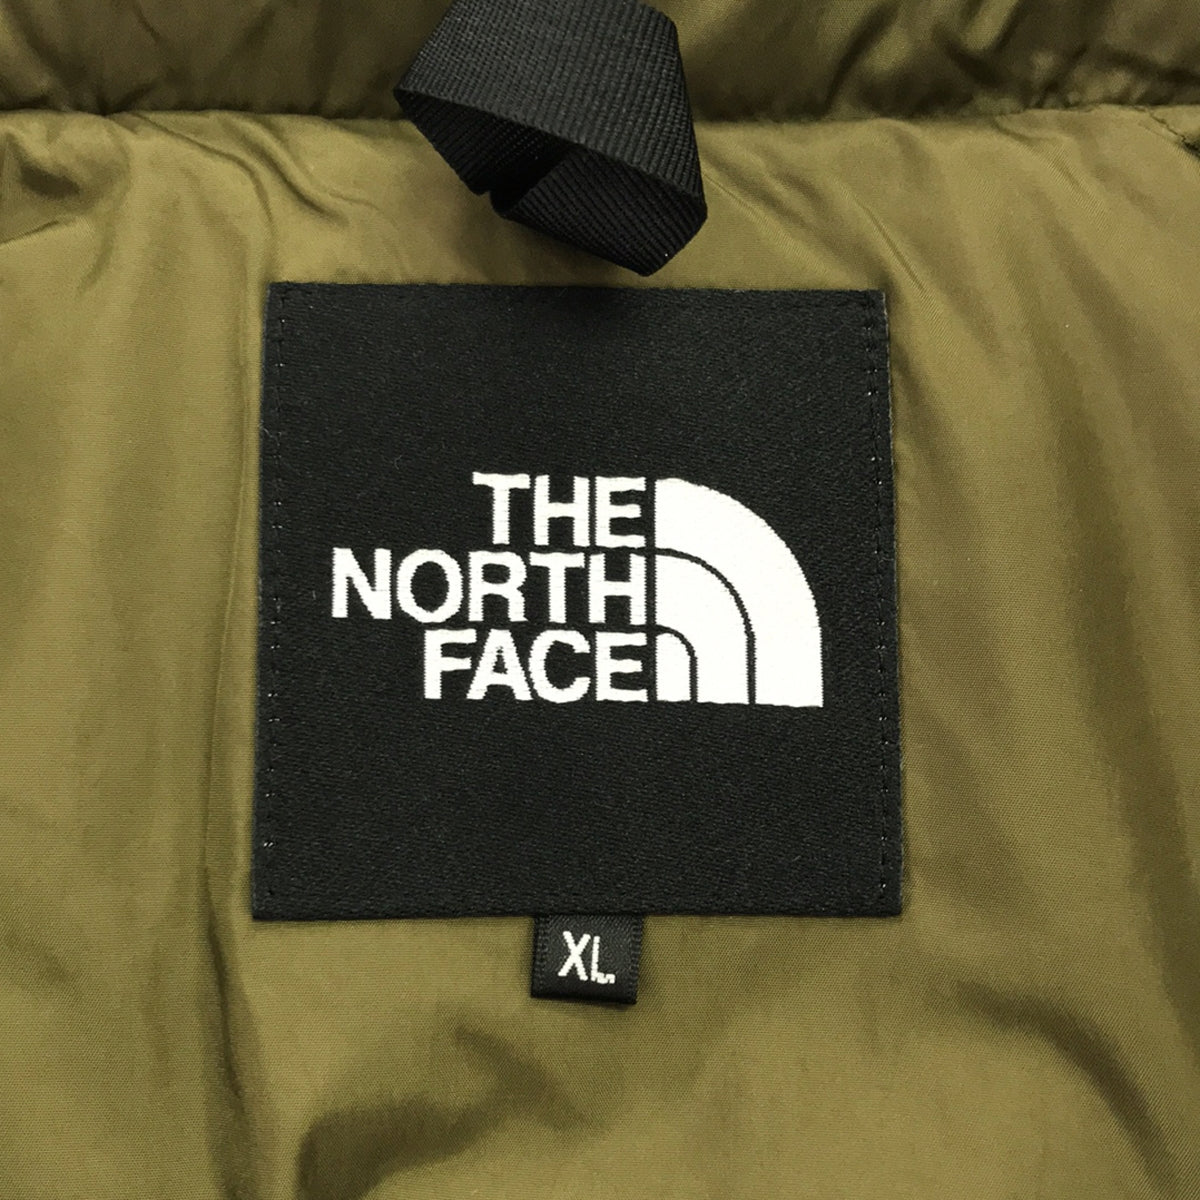 THE NORTH FACE / ザノースフェイス | Novelty Short Nuptse Jacket ジャケット | XL | レディース